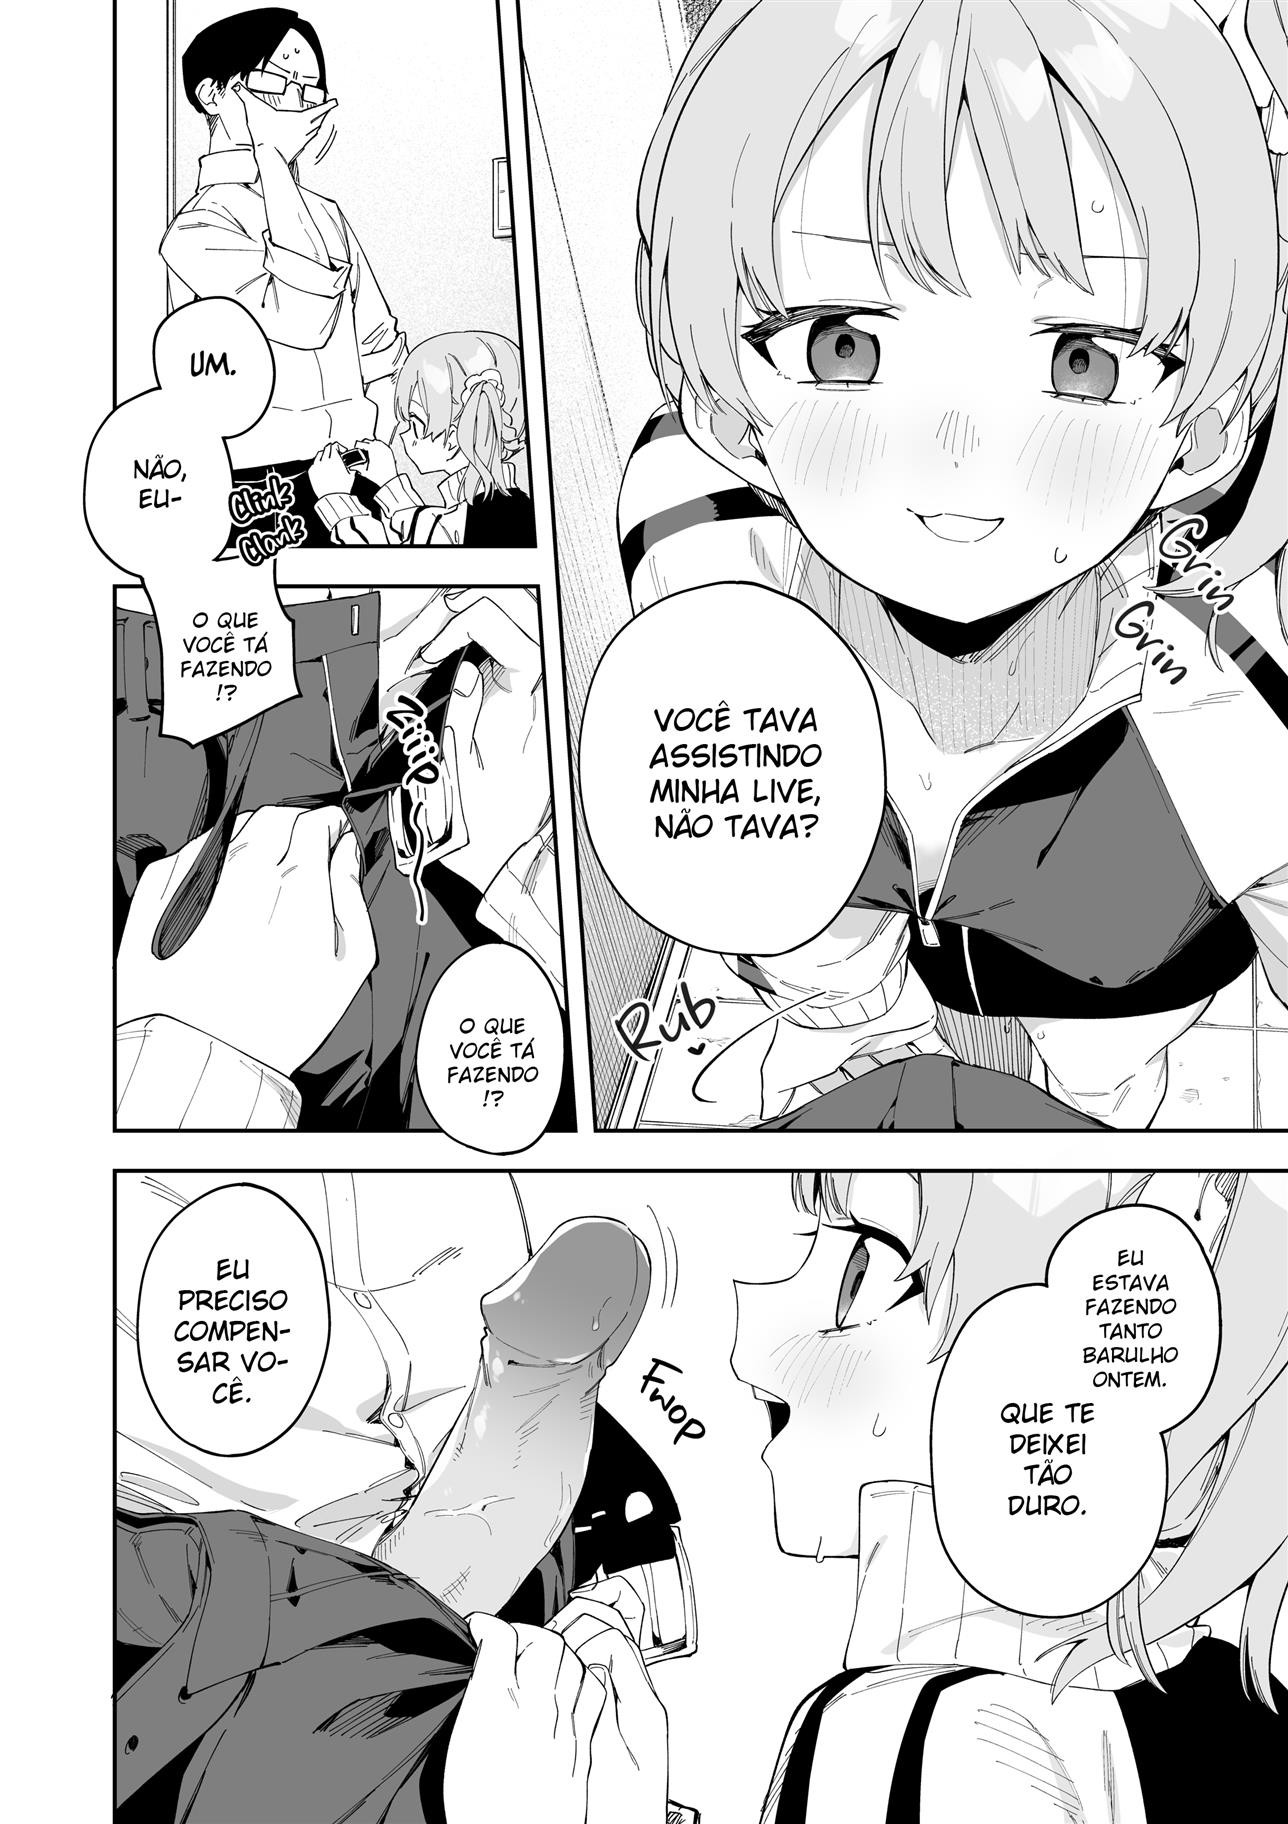 A Vizinha Camgirl A História de Yuno